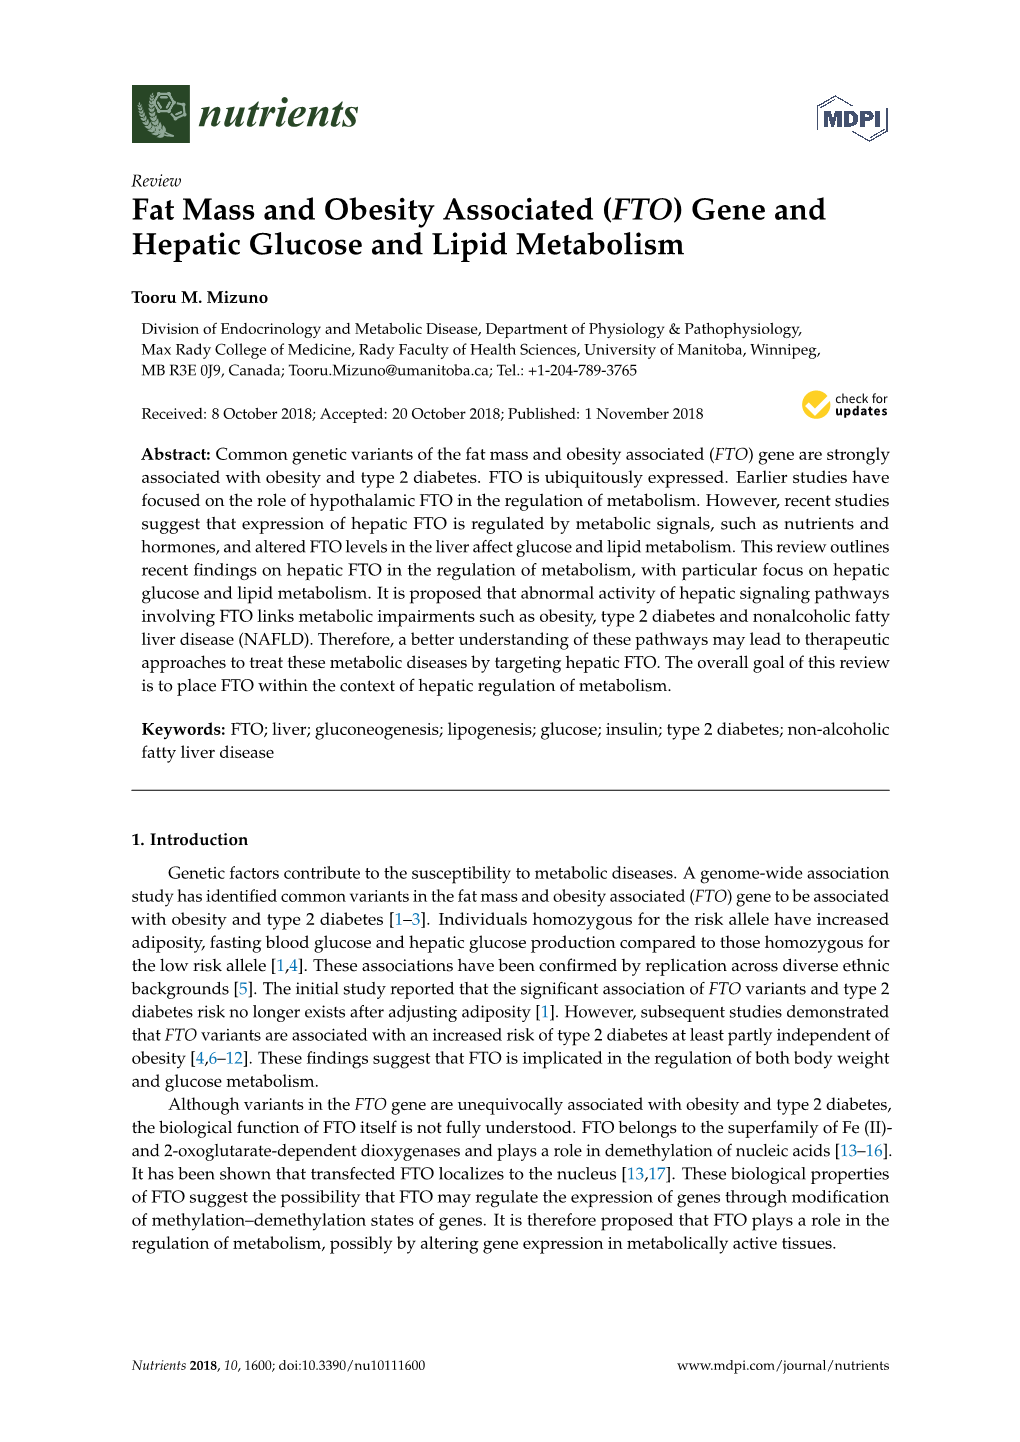 FTO) Gene and Hepatic Glucose and Lipid Metabolism